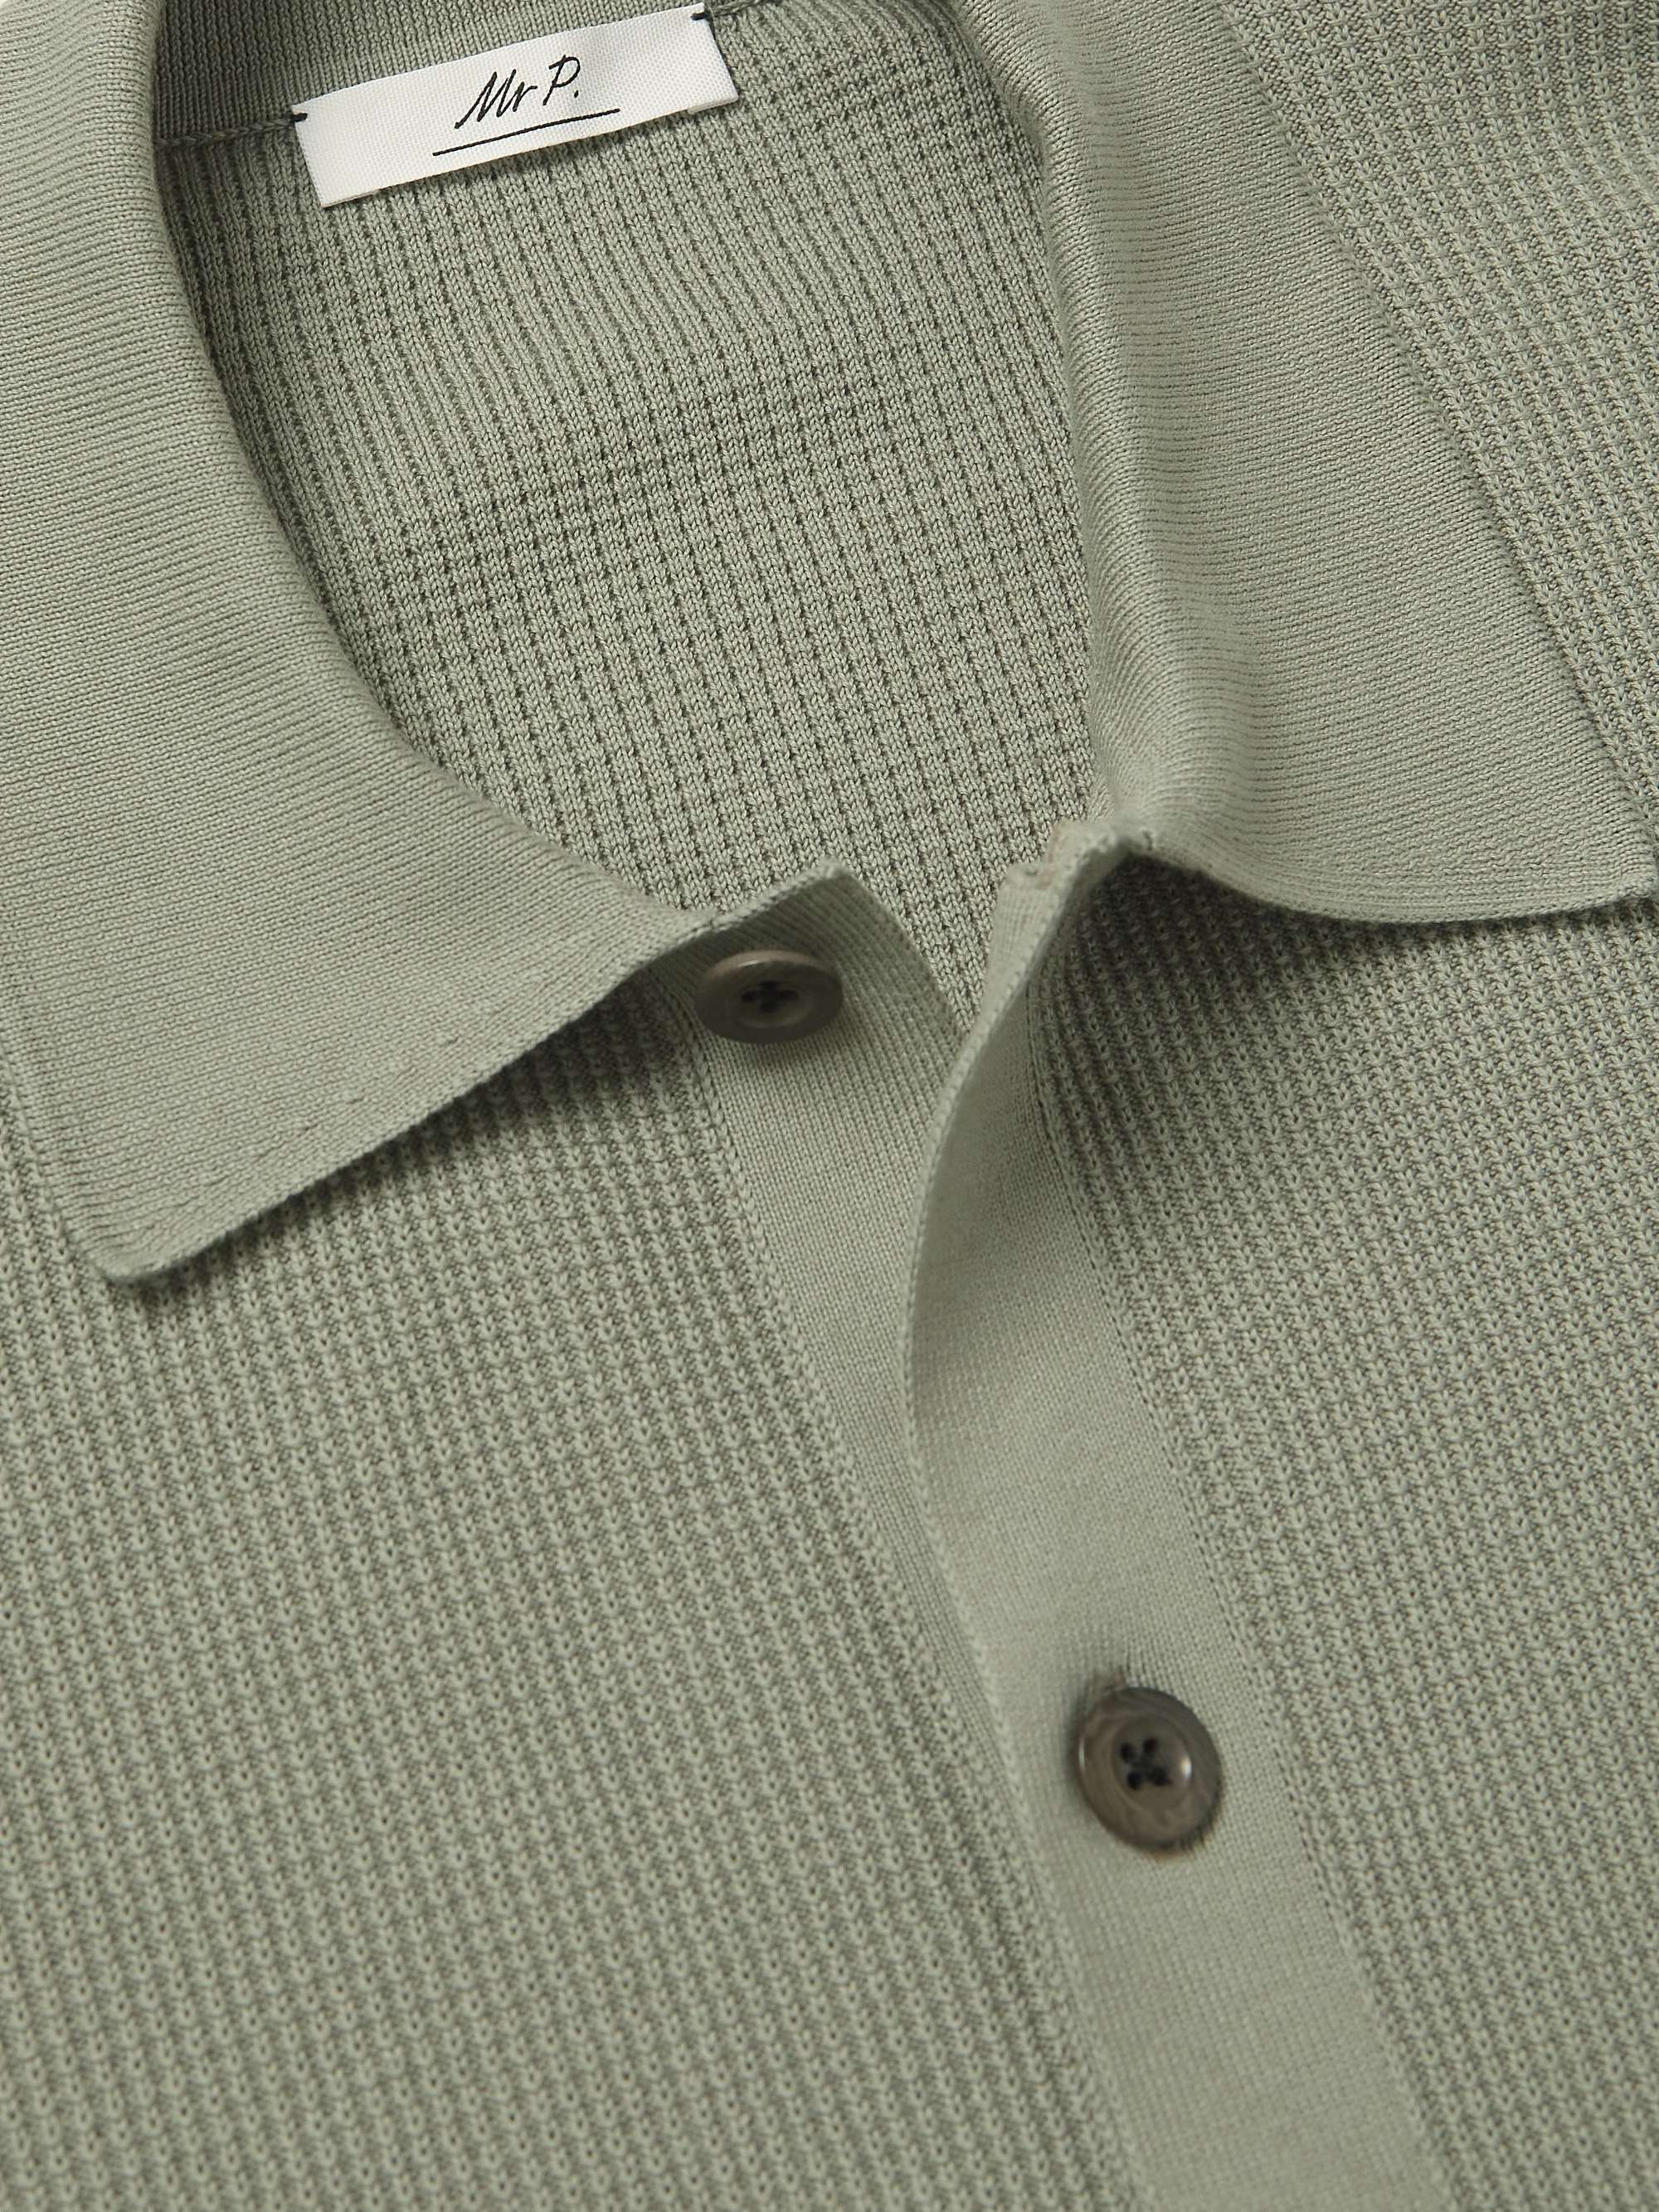 MR P. Ribbed Cotton Shirt